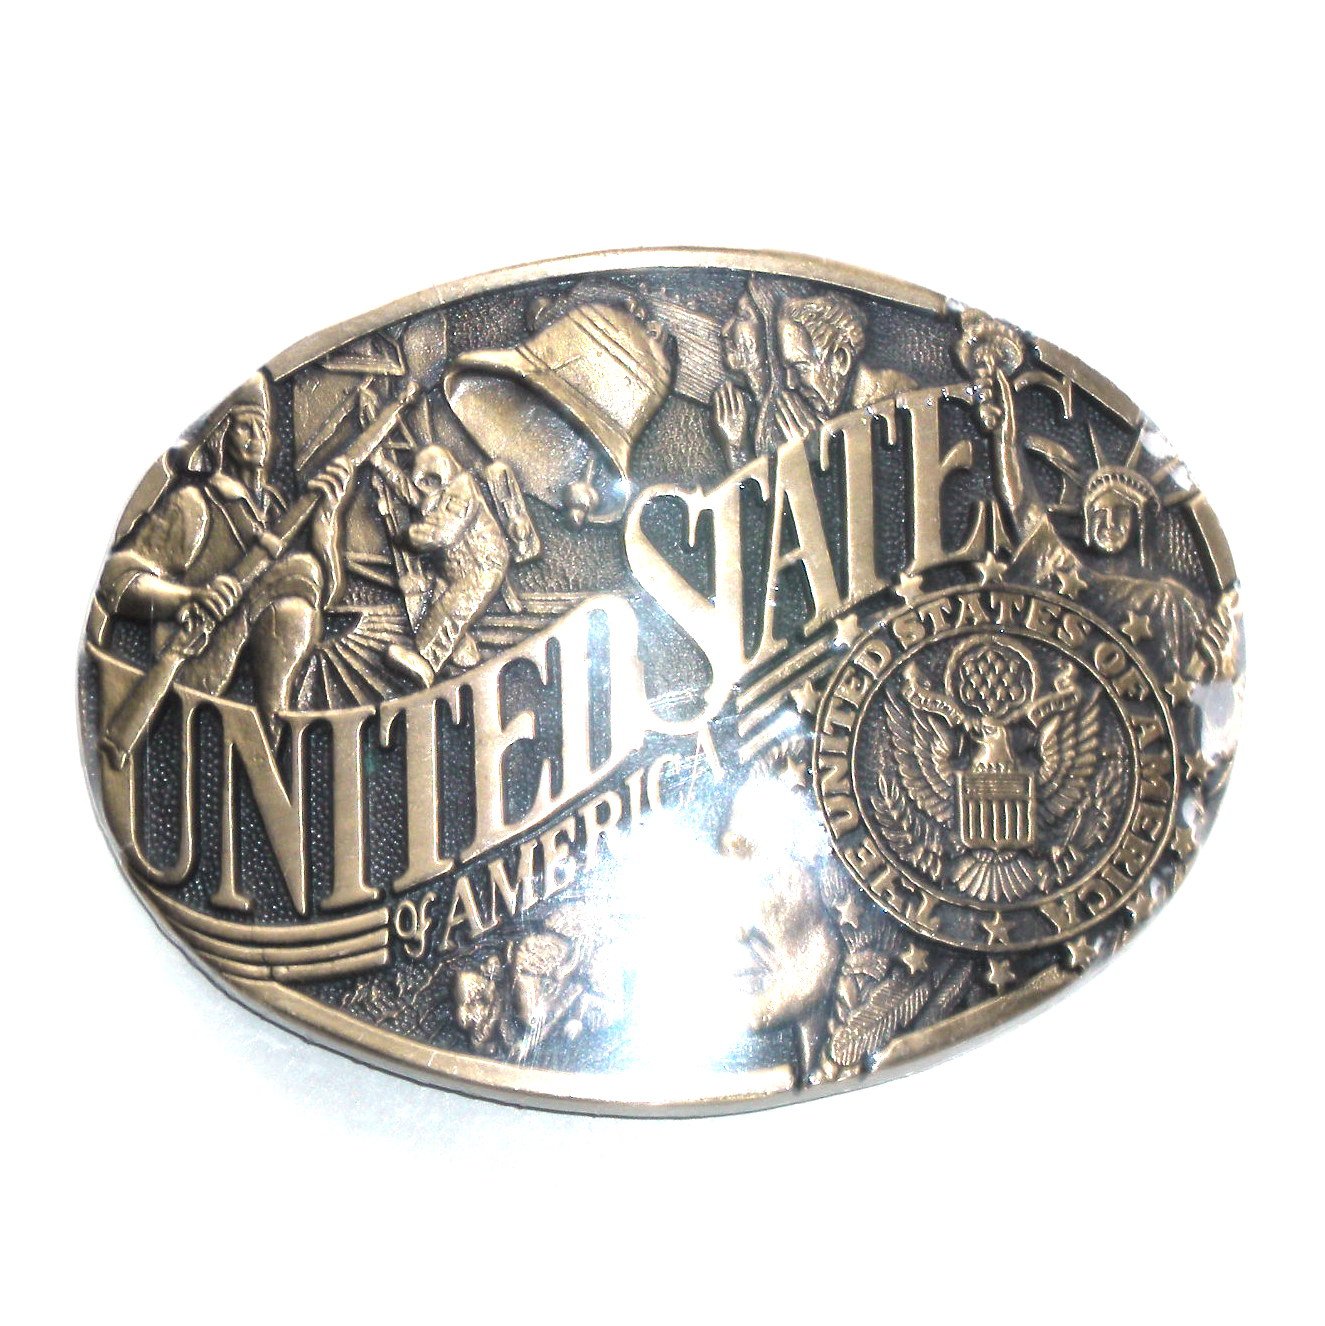 United States Seal ADM Award Design Solid Brass Belt Buckle